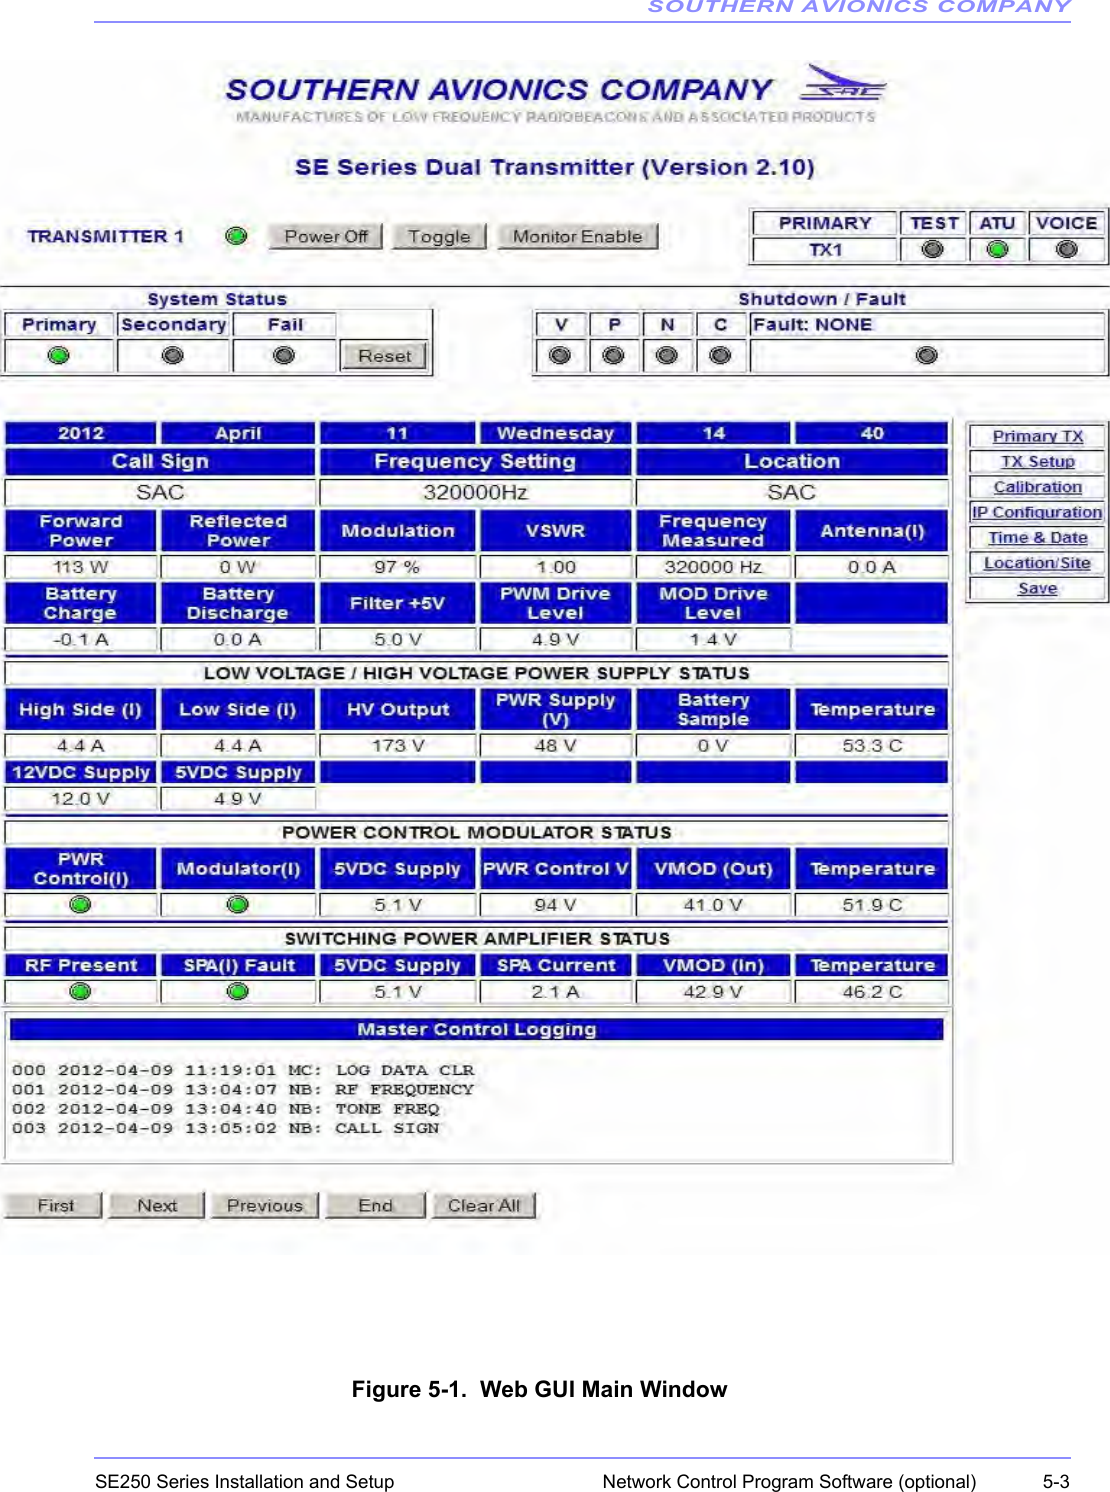 SOUTHERN AVIONICS COMPANYSE250 Series Installation and Setup  5-3Network Control Program Software (optional)Figure 5-1.  Web GUI Main Window 